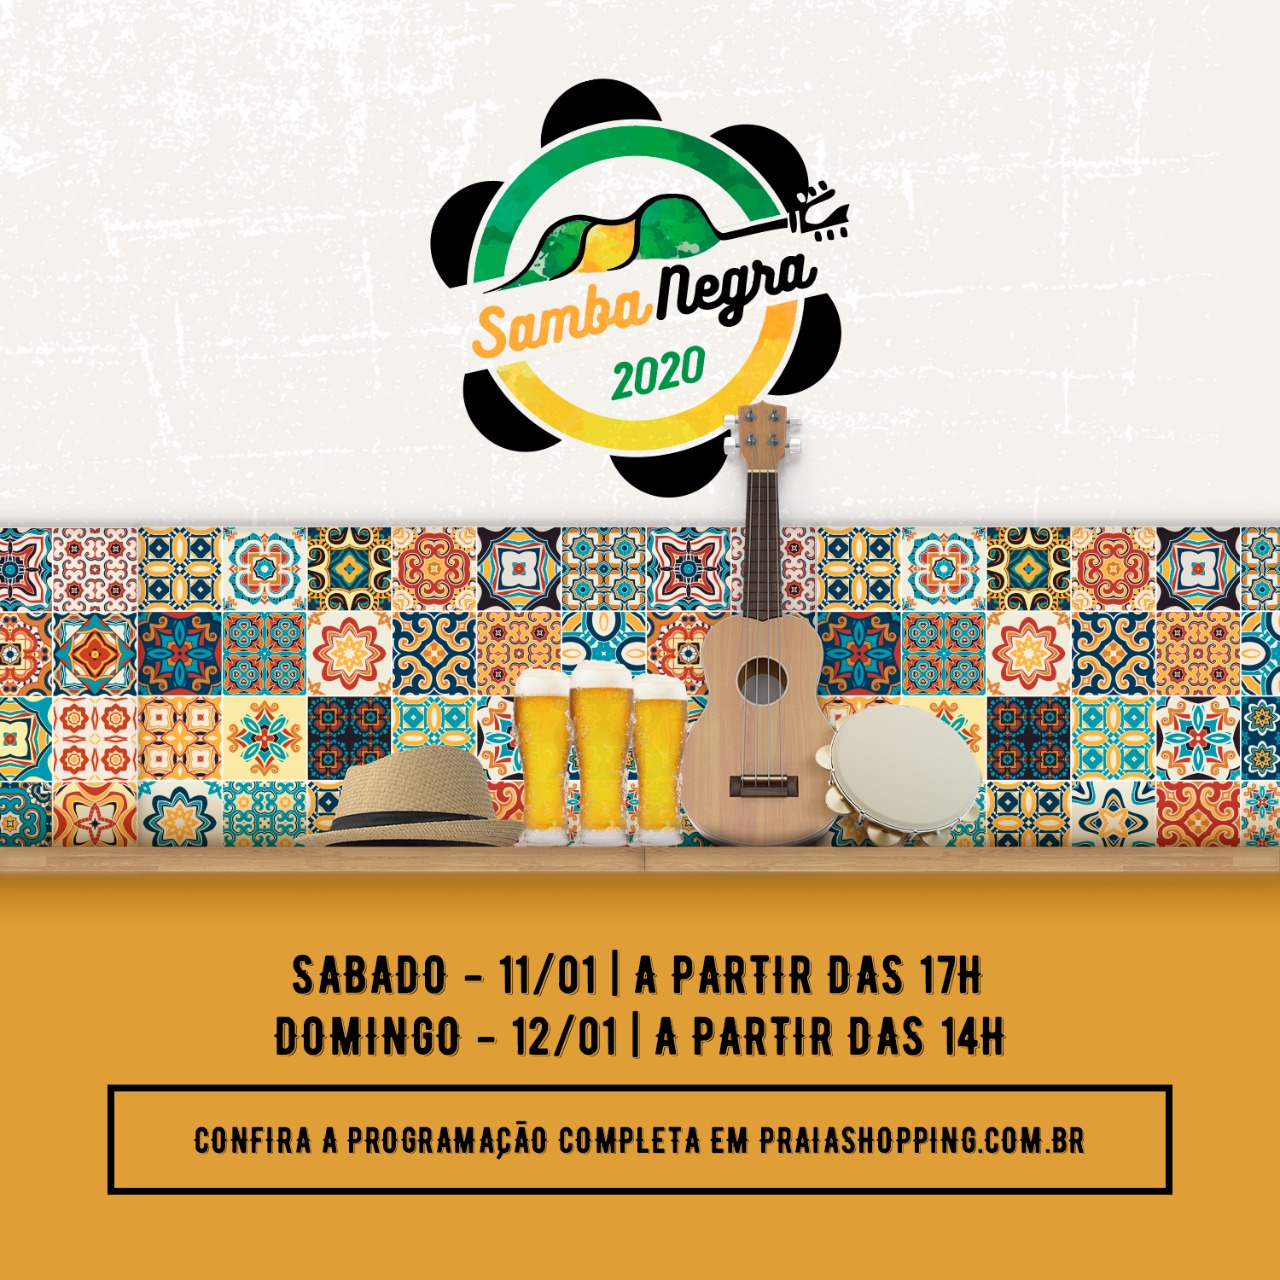 Samba Negra anima Praia Shopping neste final de semana